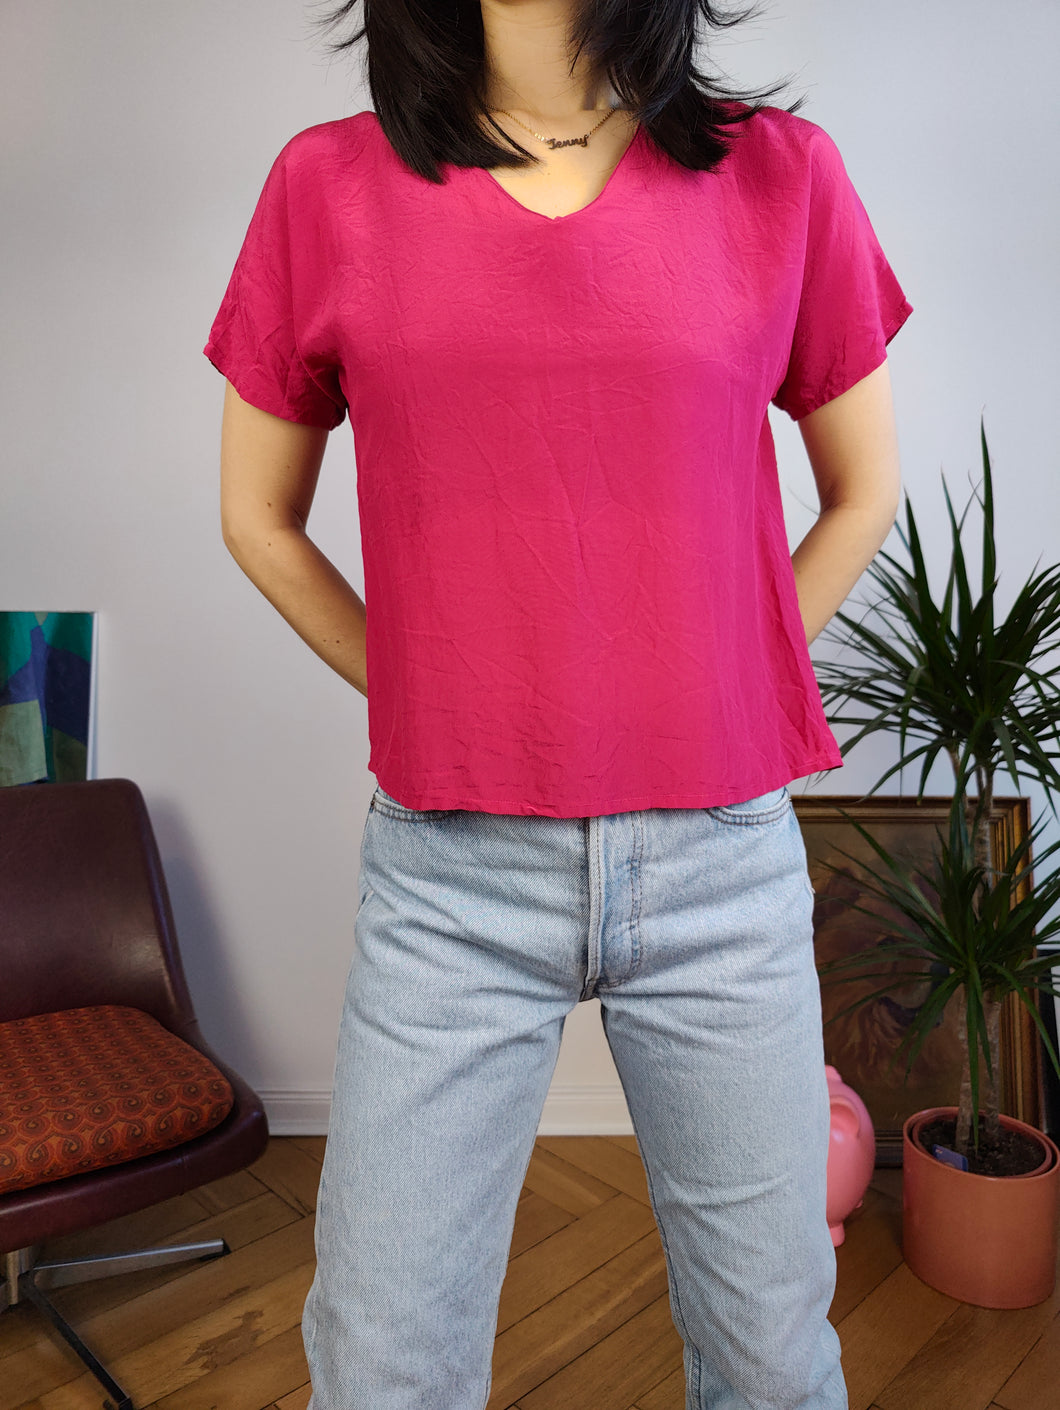 Vintage 100% silk top blouse magenta pink plain short sleeve women S